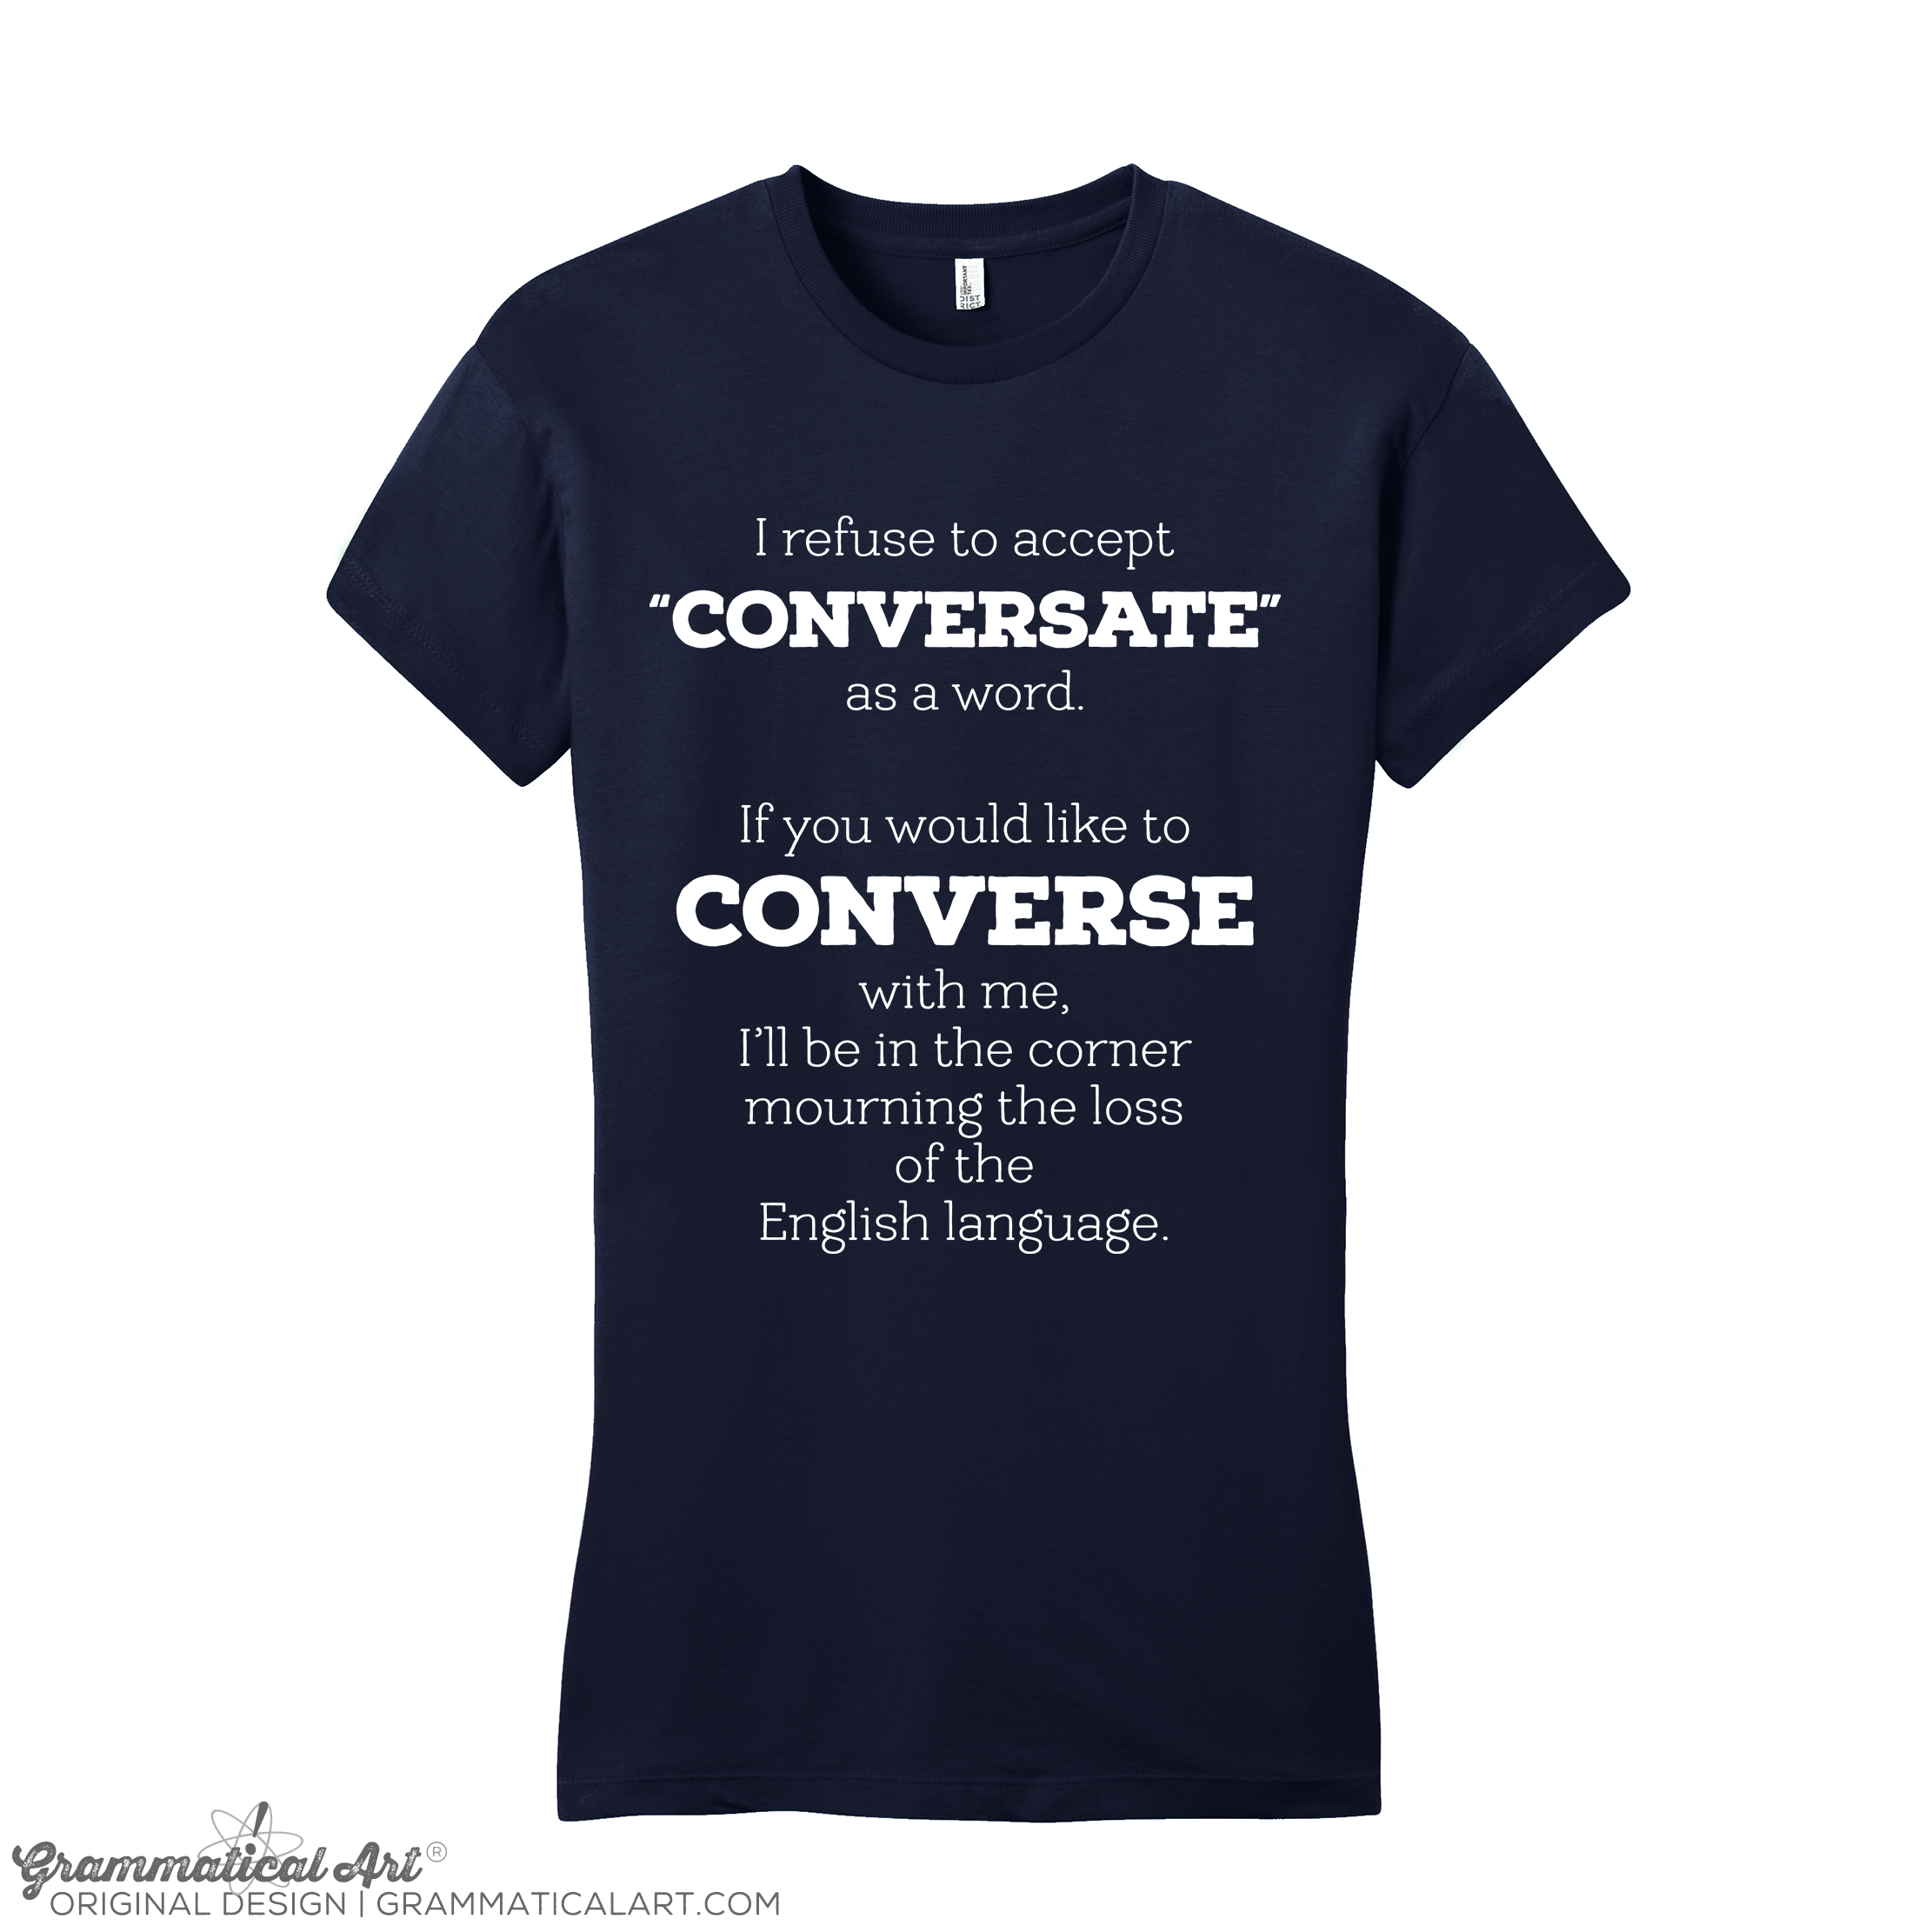 converse shirts for women